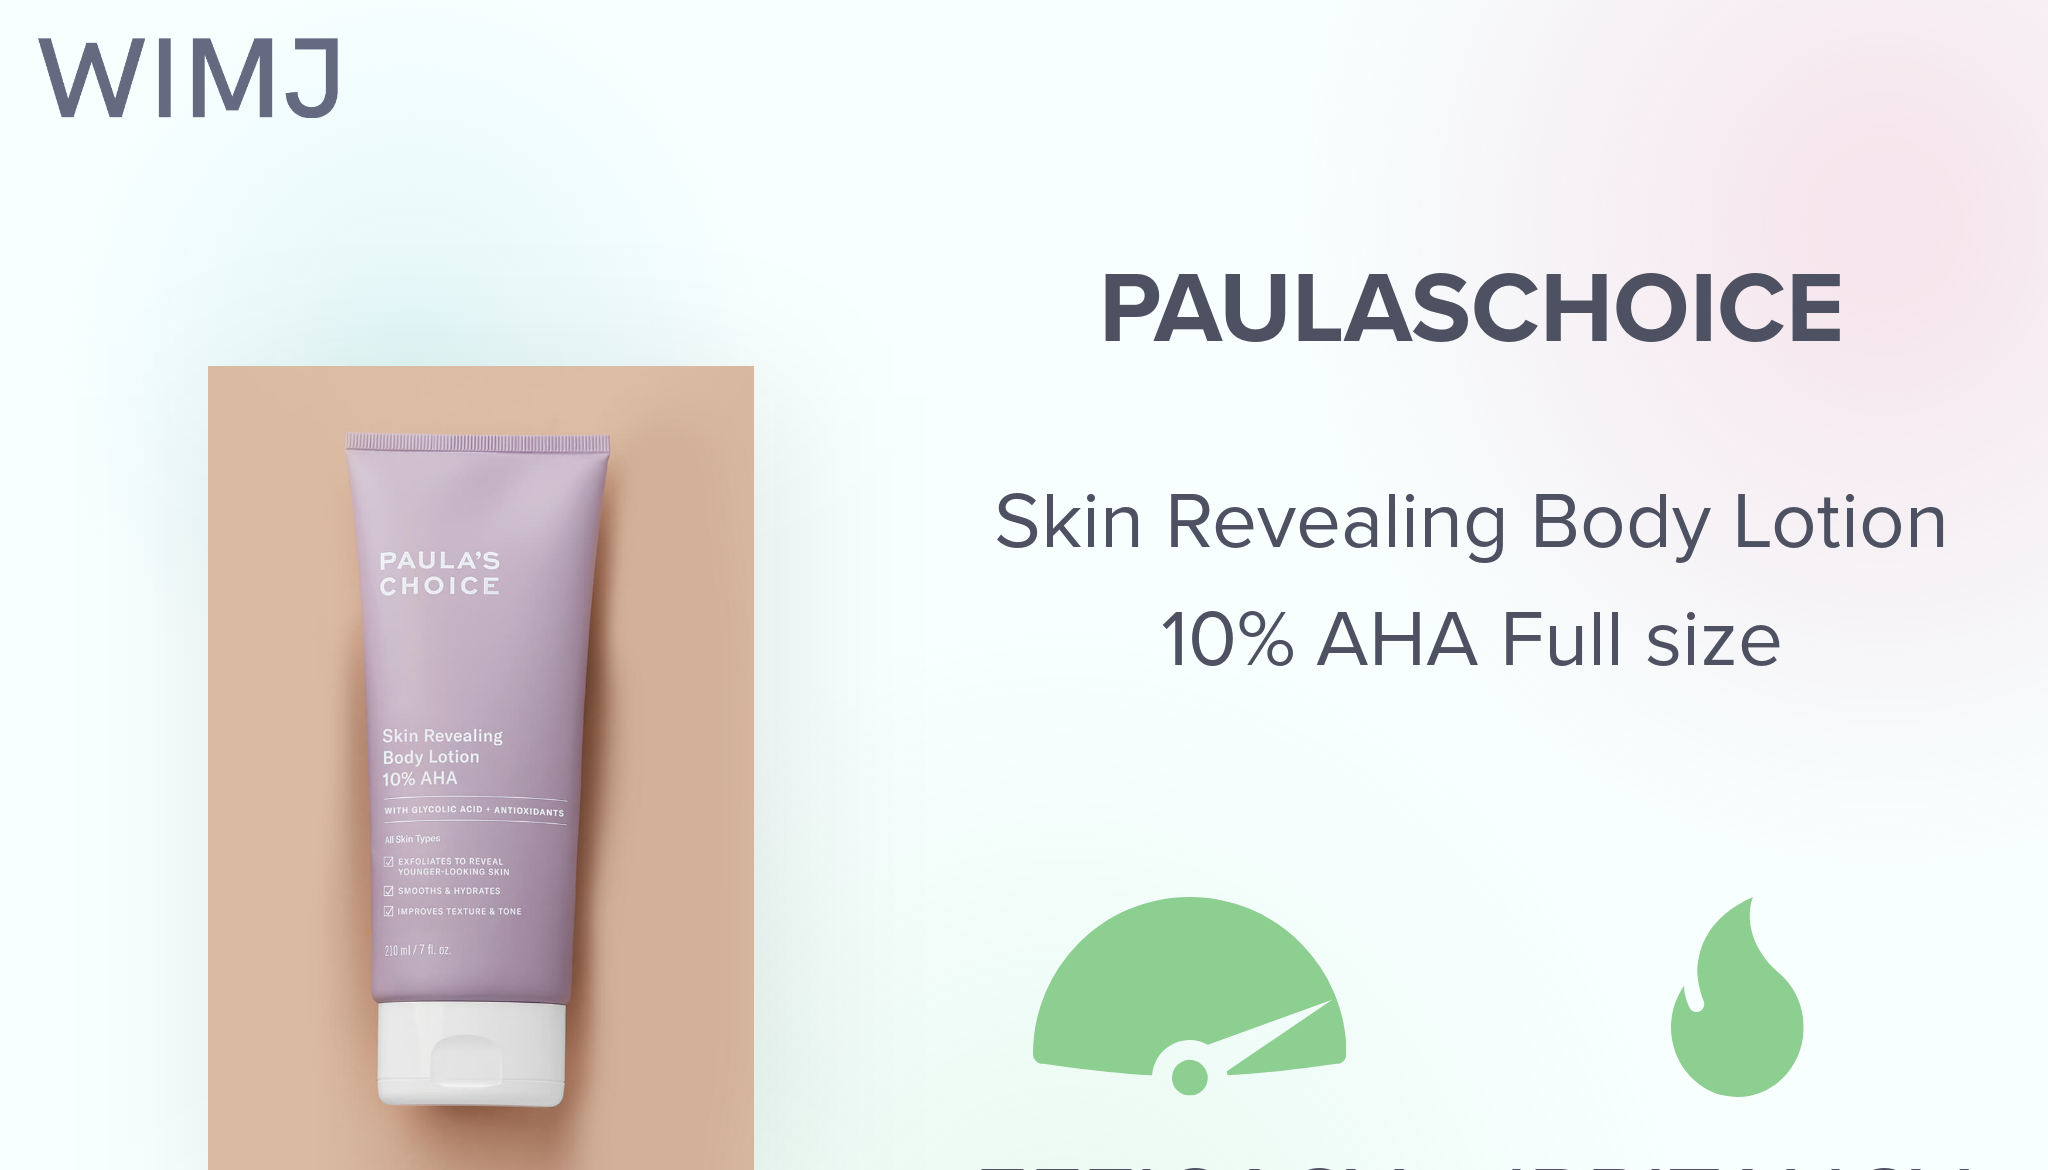 Review: Paulaschoice - Skin Revealing Body Lotion 10% AHA Full size